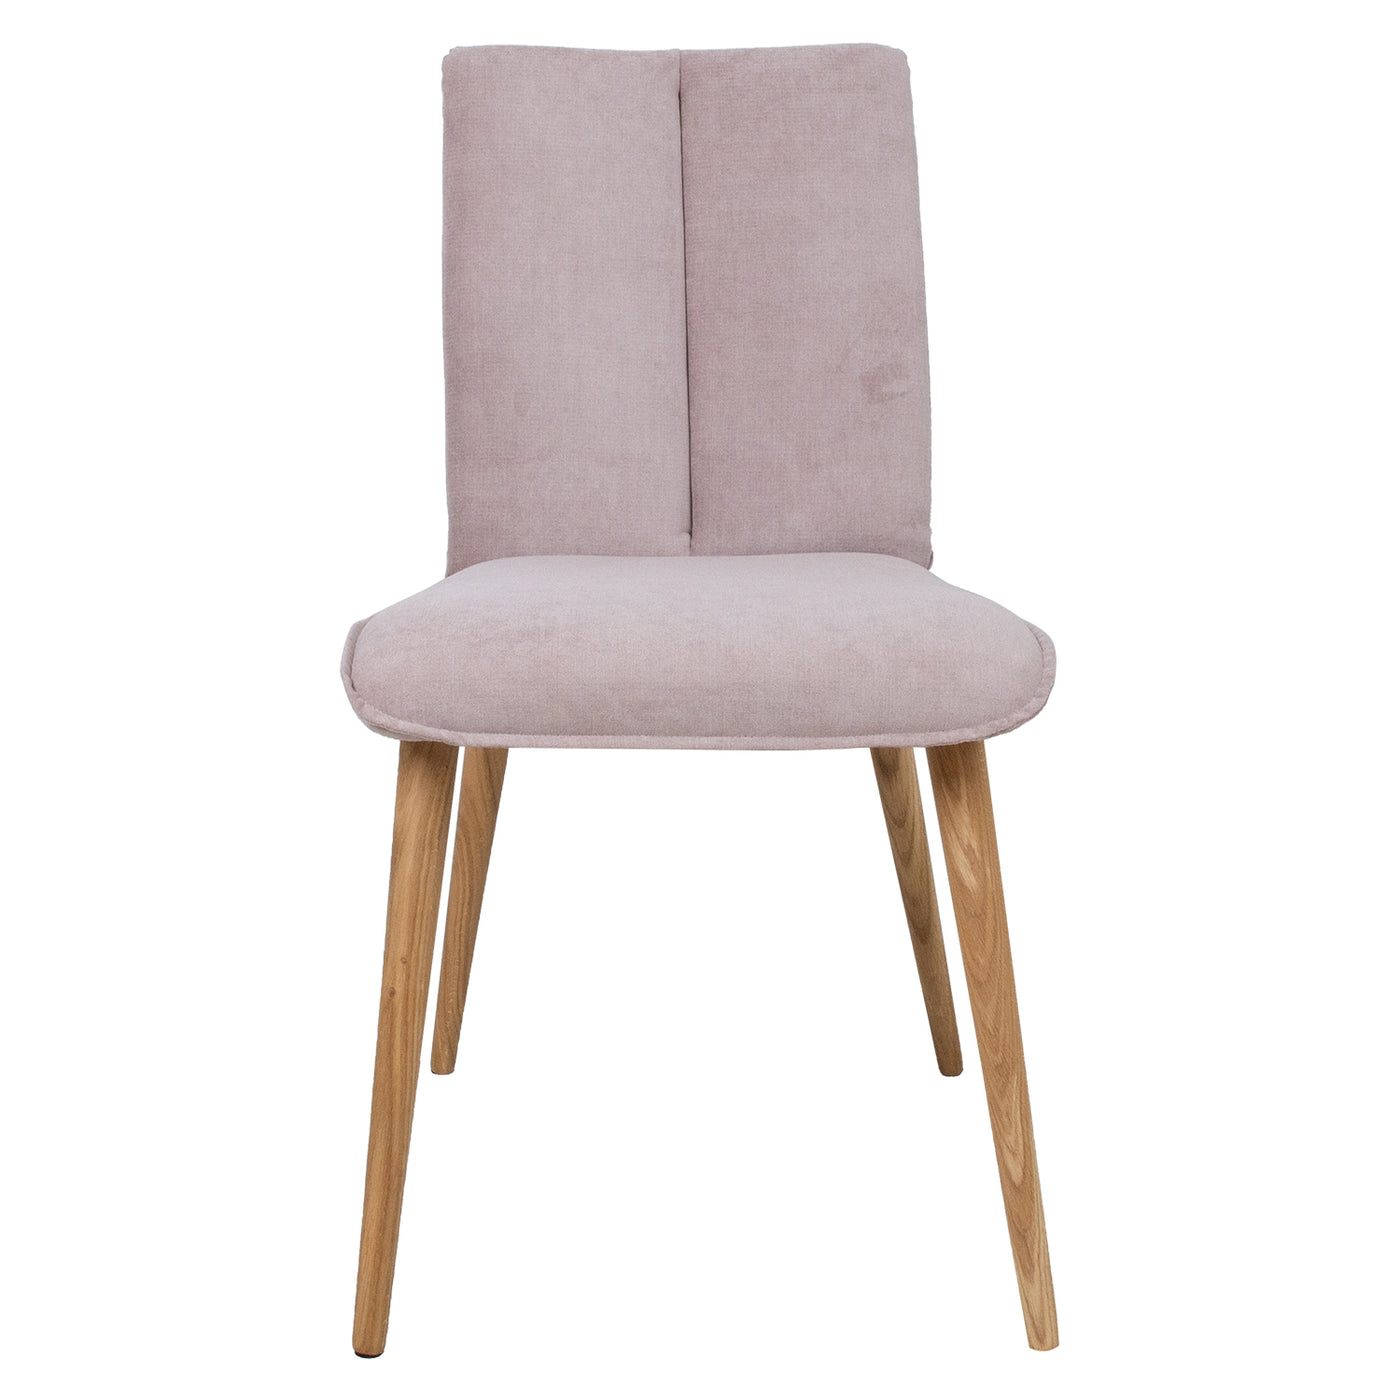 Nova tuoli, vanha roosa/tammi - Mööpeli.com